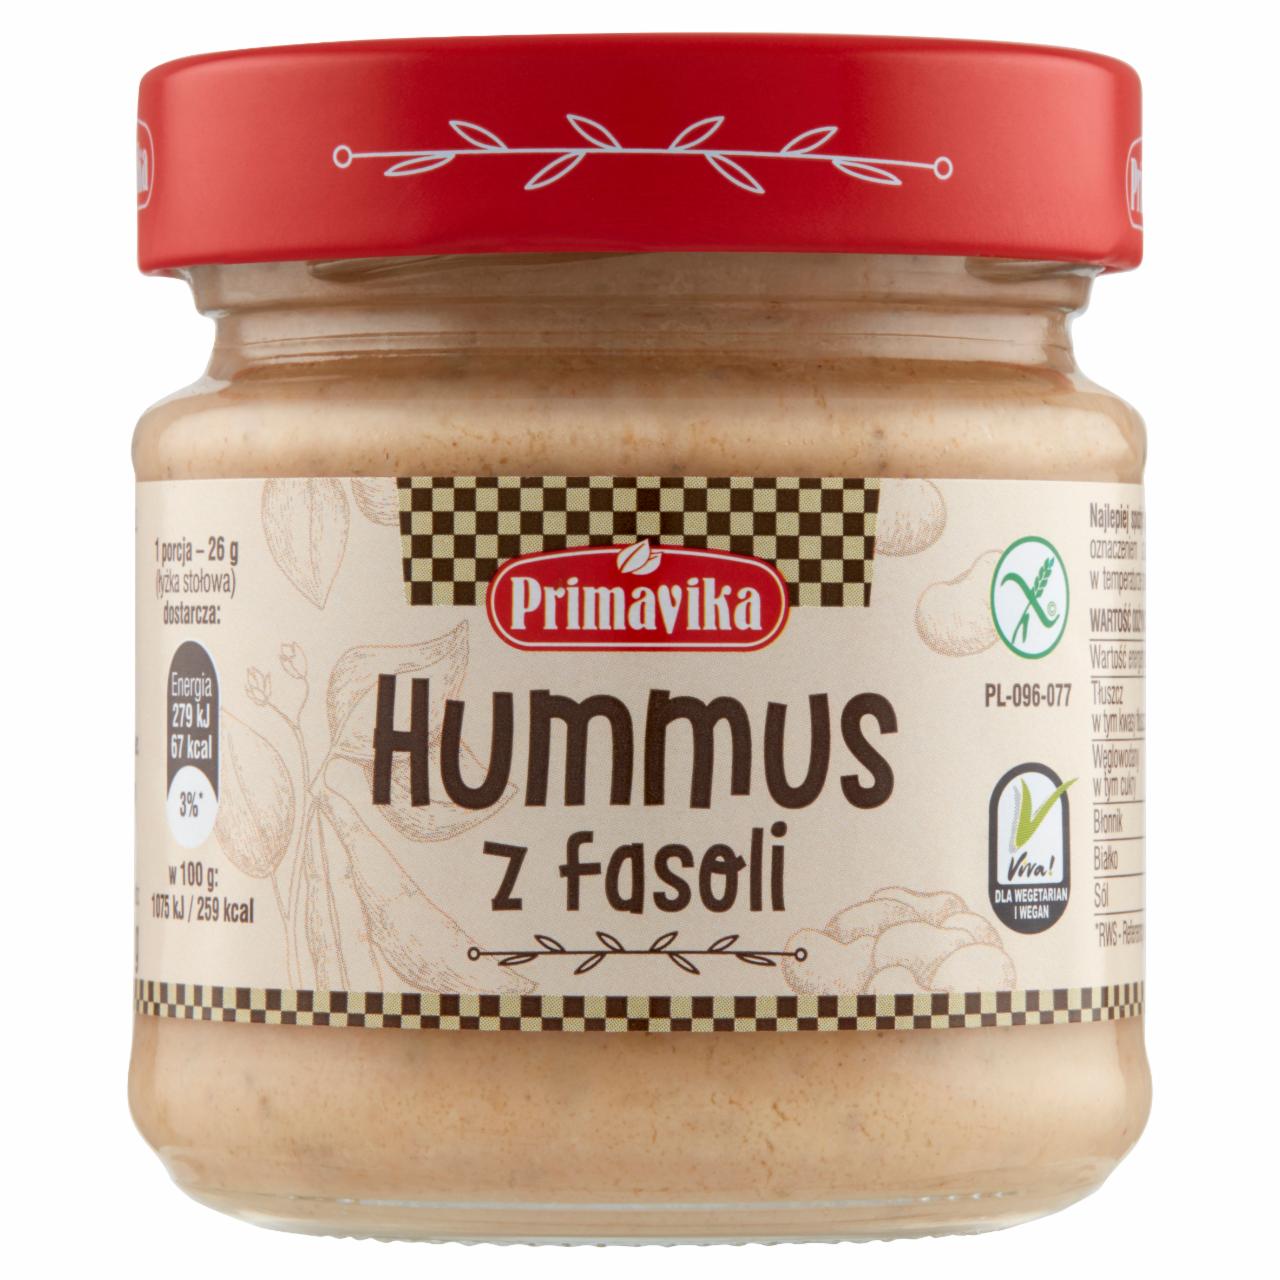 Zdjęcia - Primavika Hummus z fasoli 160 g